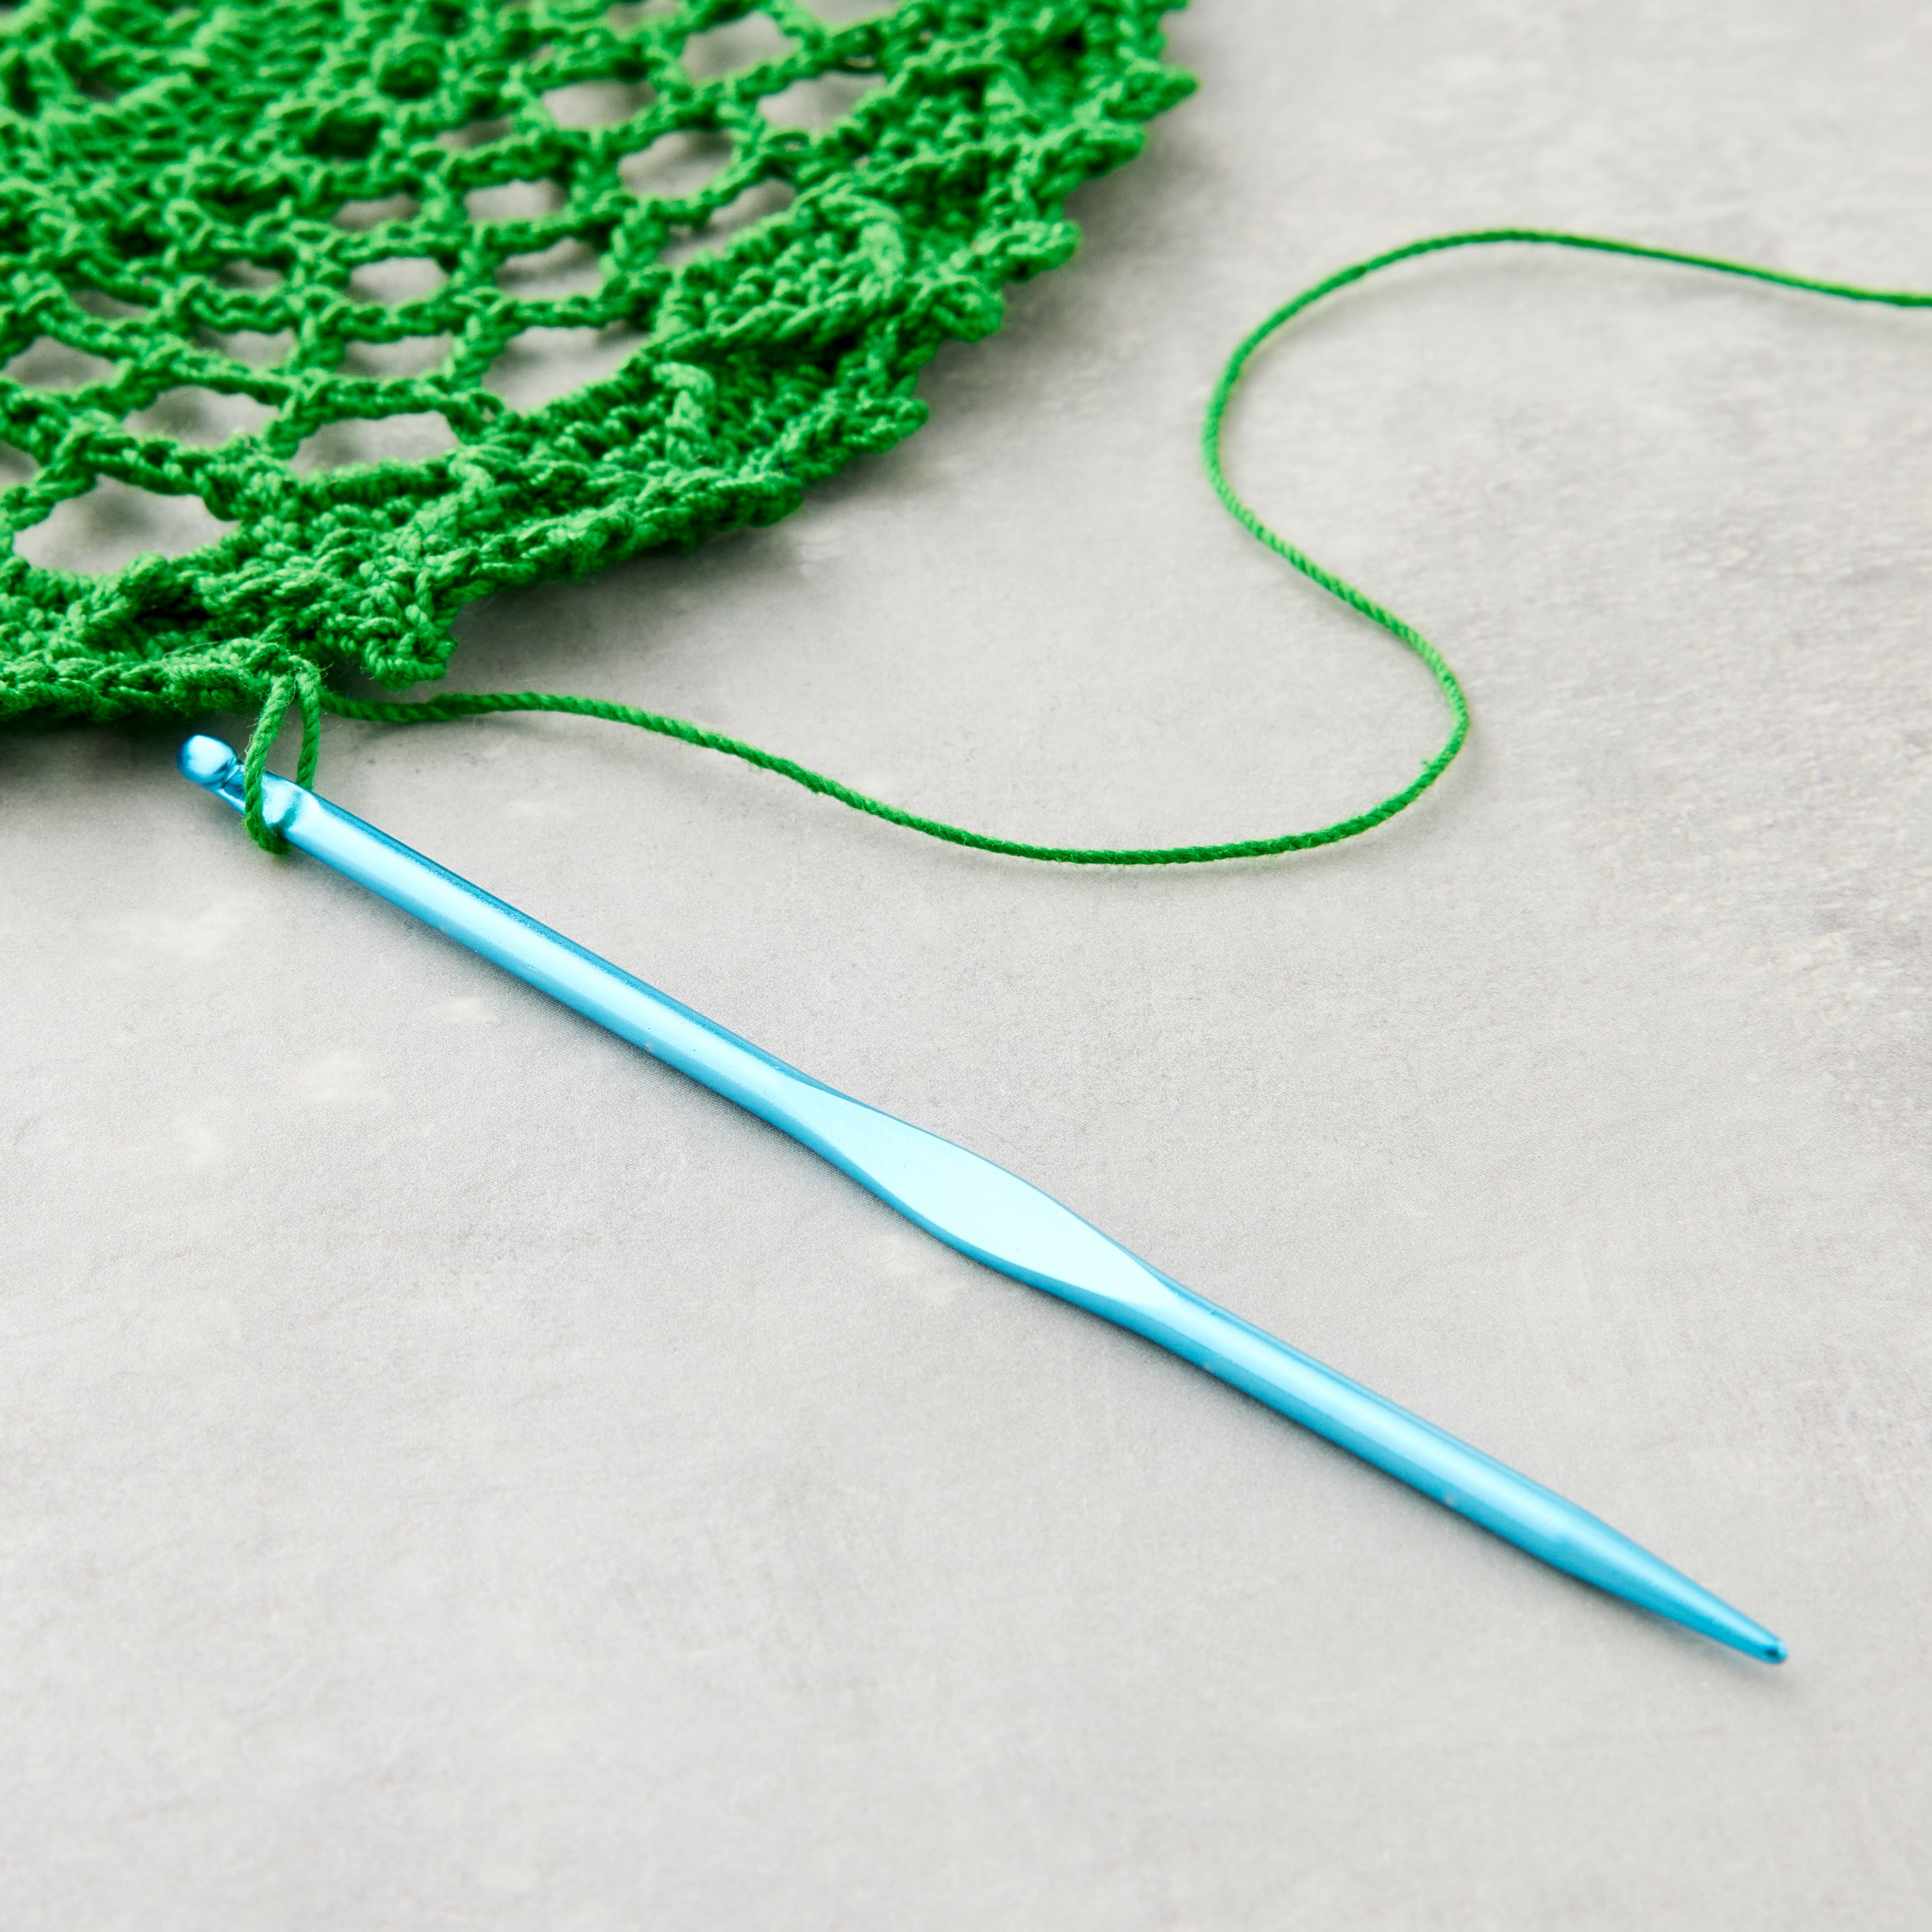 Jumbo Wood Crochet Hook by Loops & Threads®